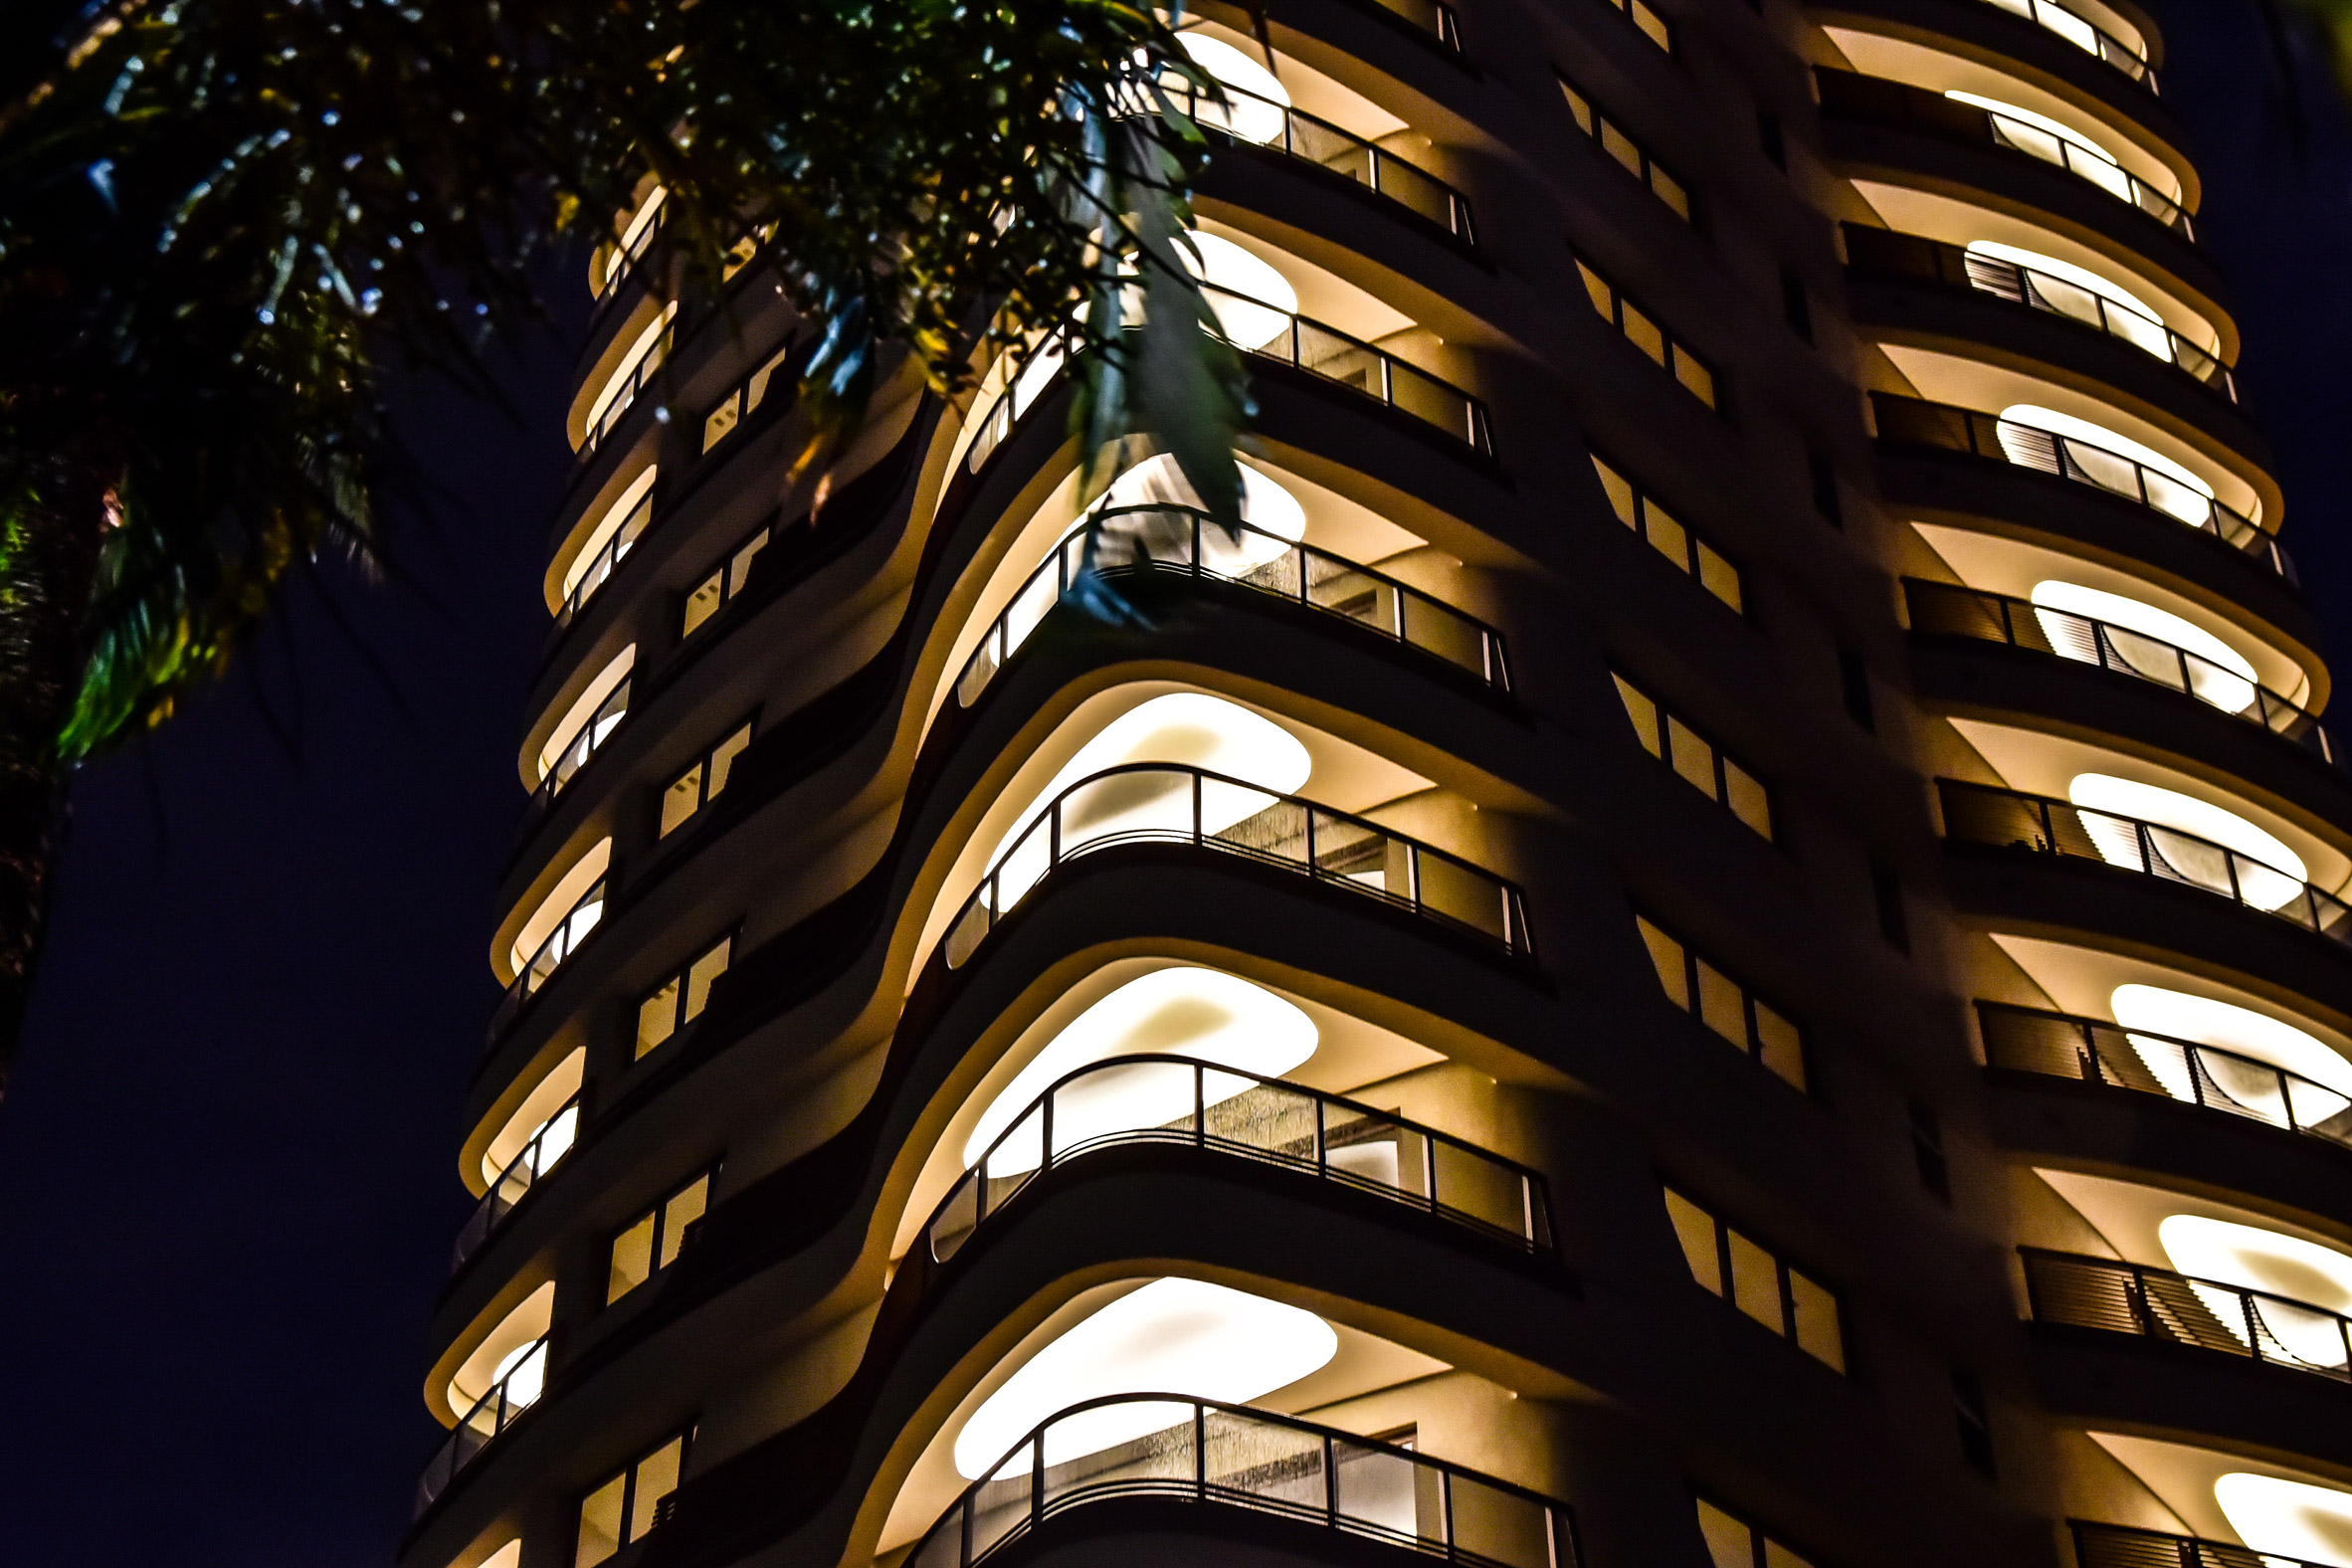 Pinfarina completes luxury tower in São Paulo